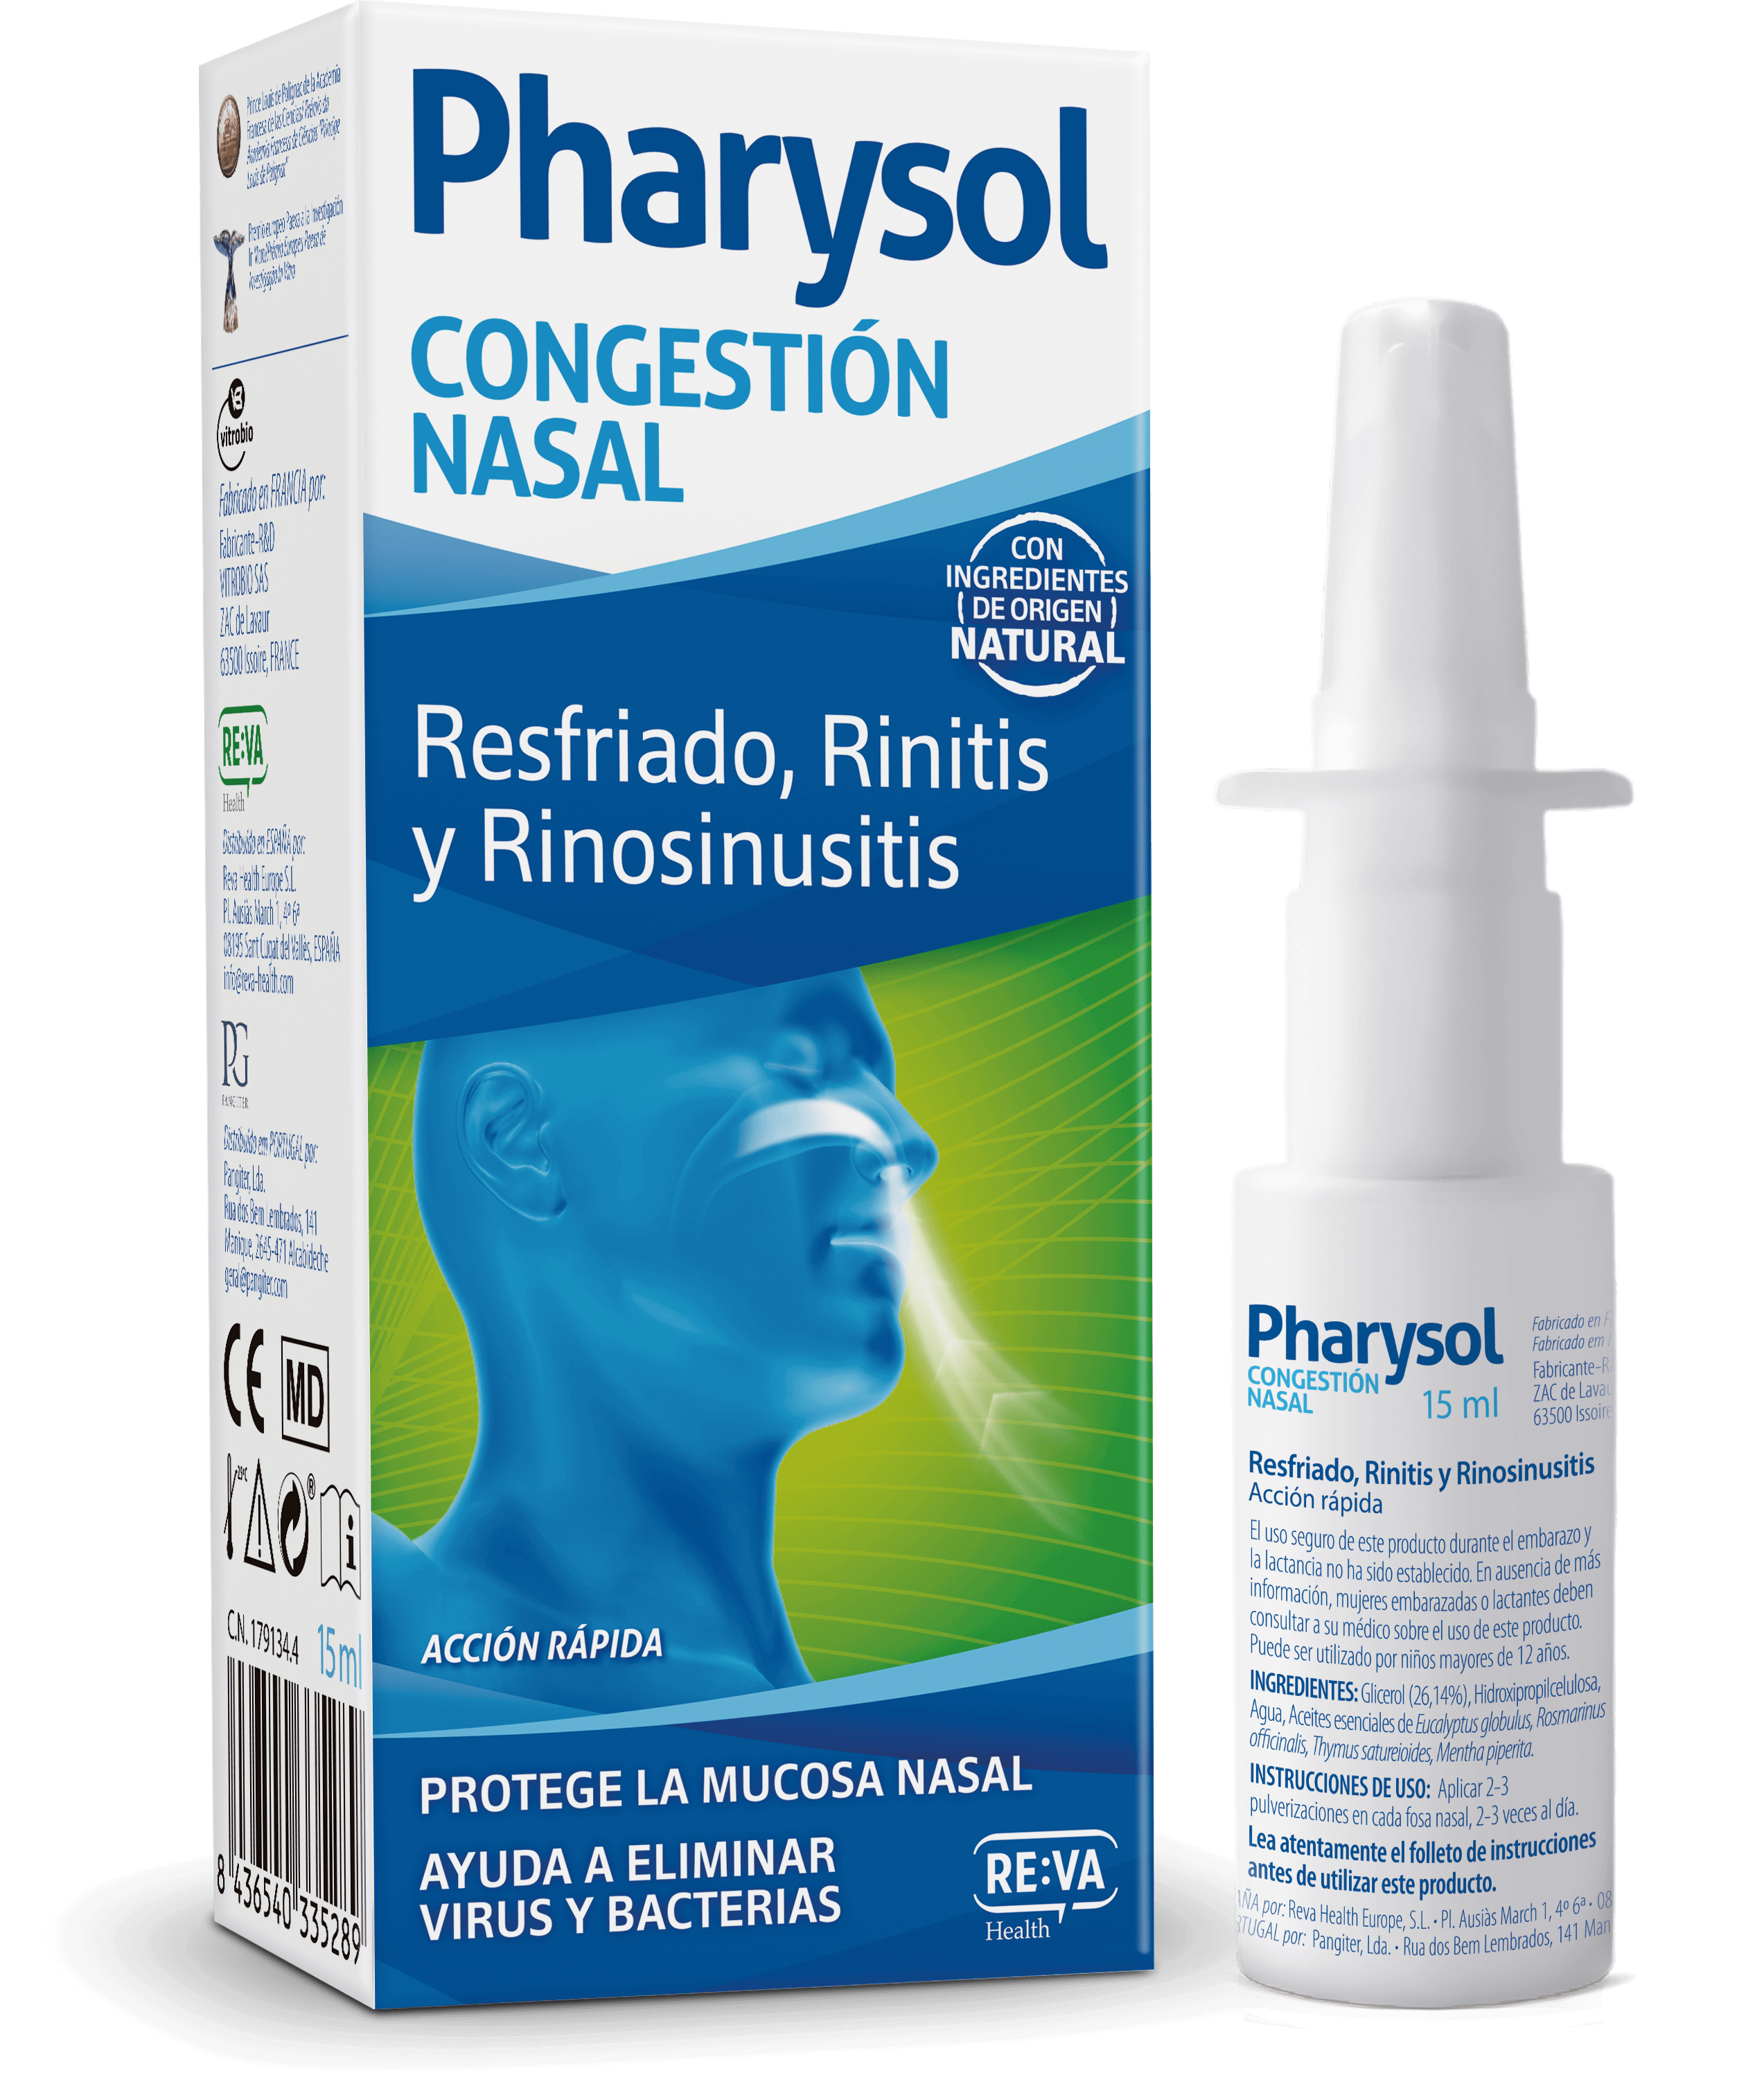 pharysol sinus descongestion nasal